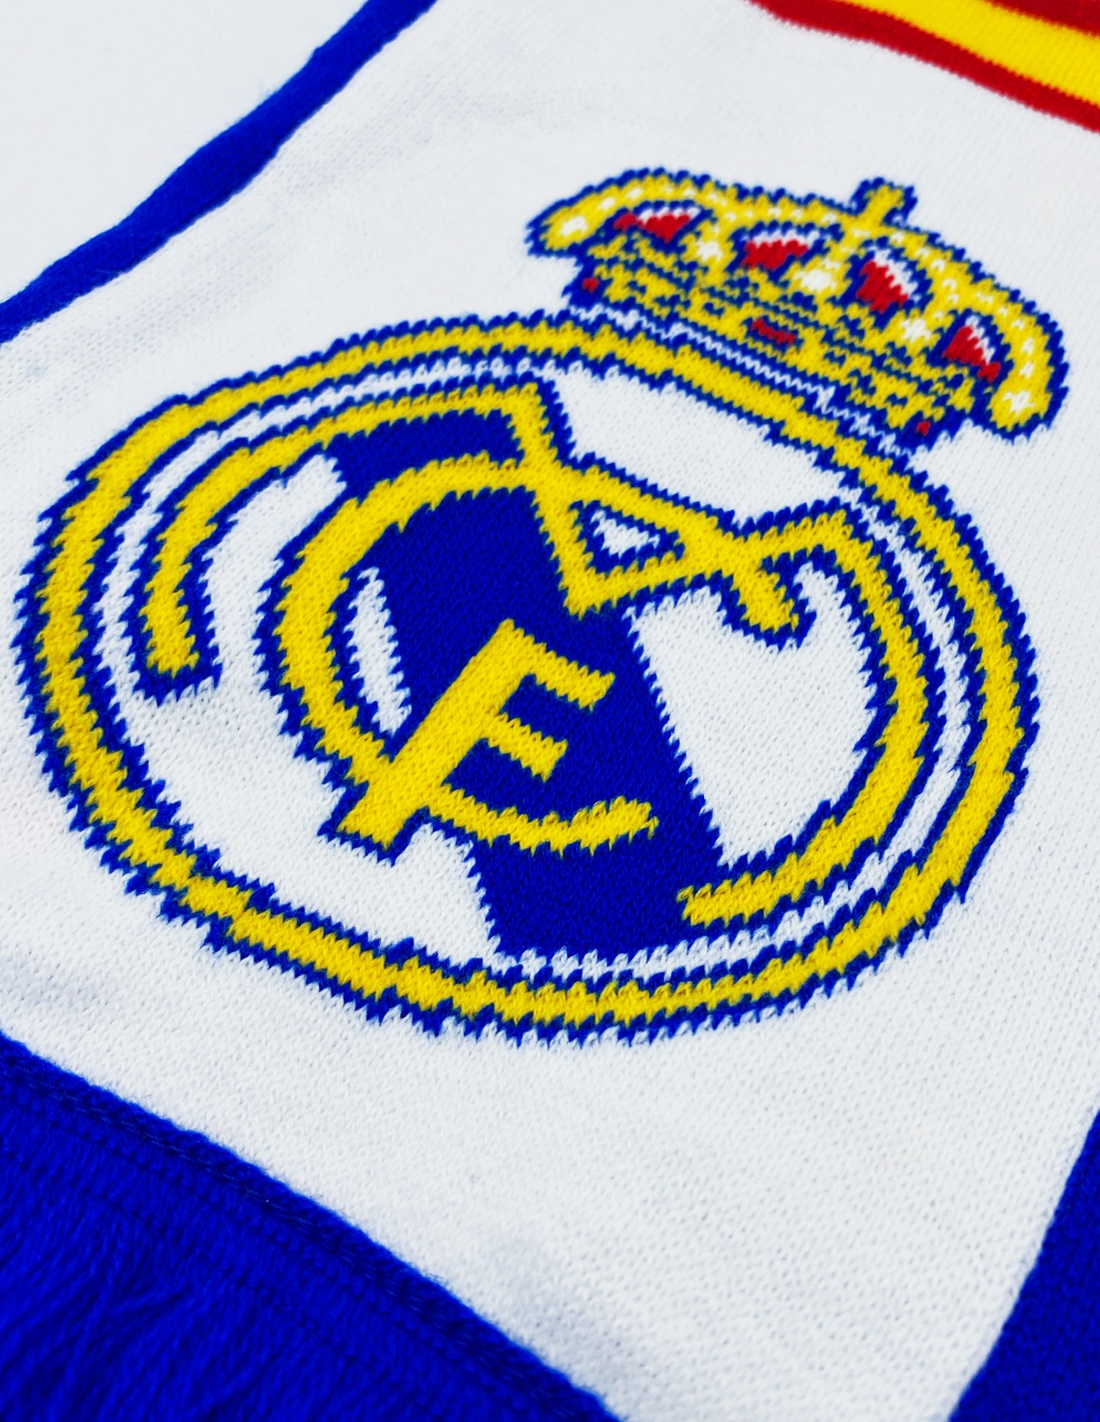 Real Madrid bufanda oficial invierno| bufanda oficial Real Madrid doble